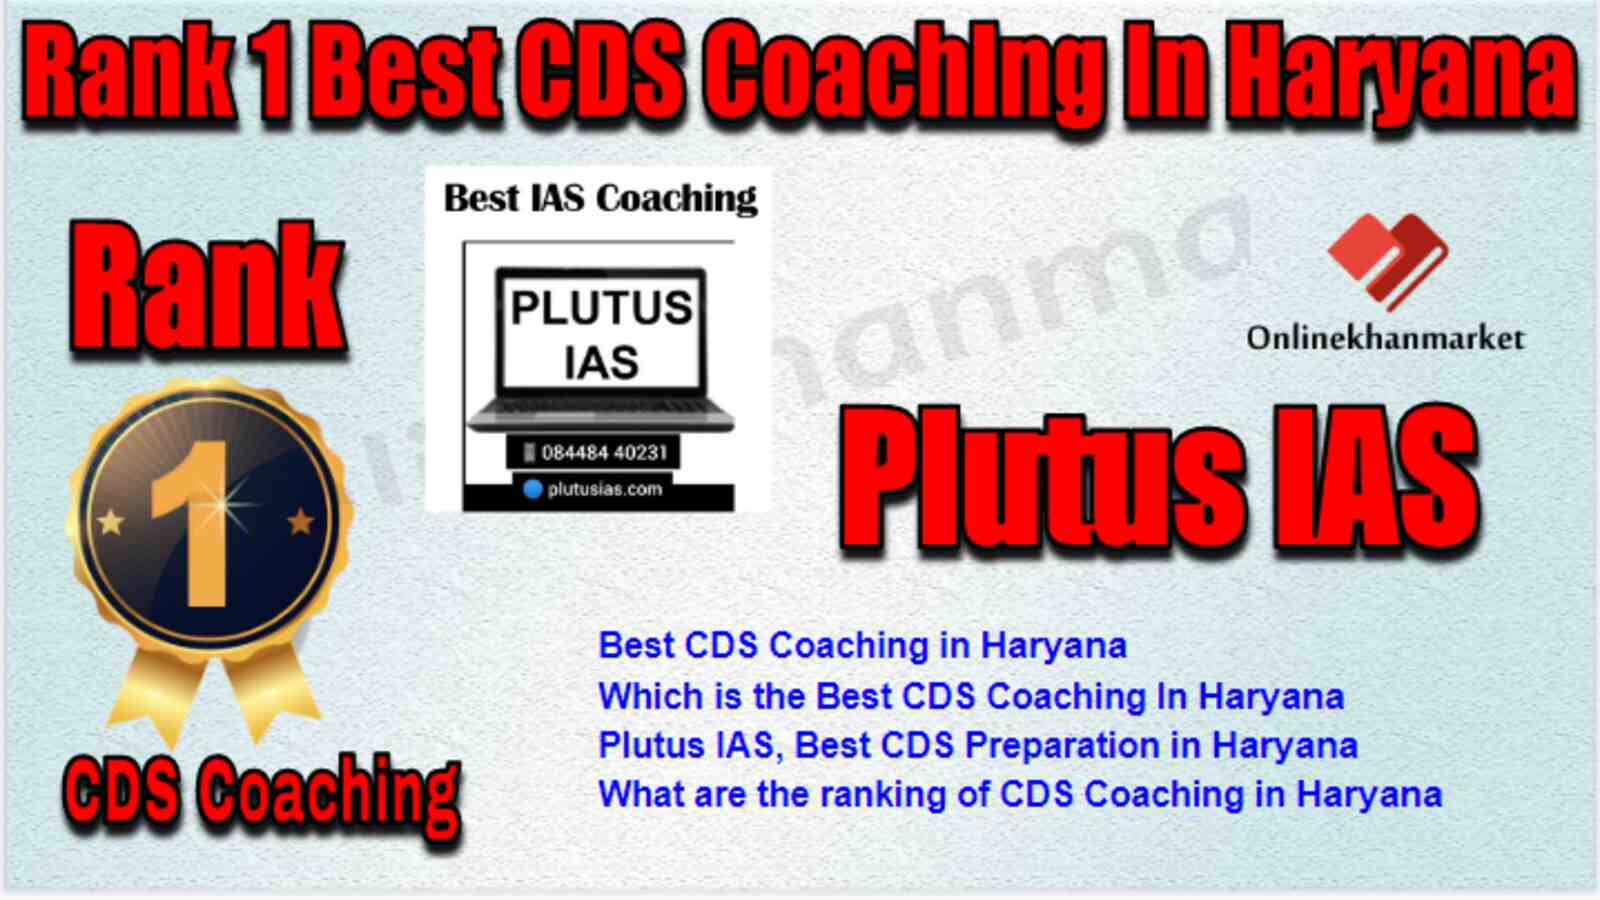 Rank 1 Best CDS Coaching in Haryana